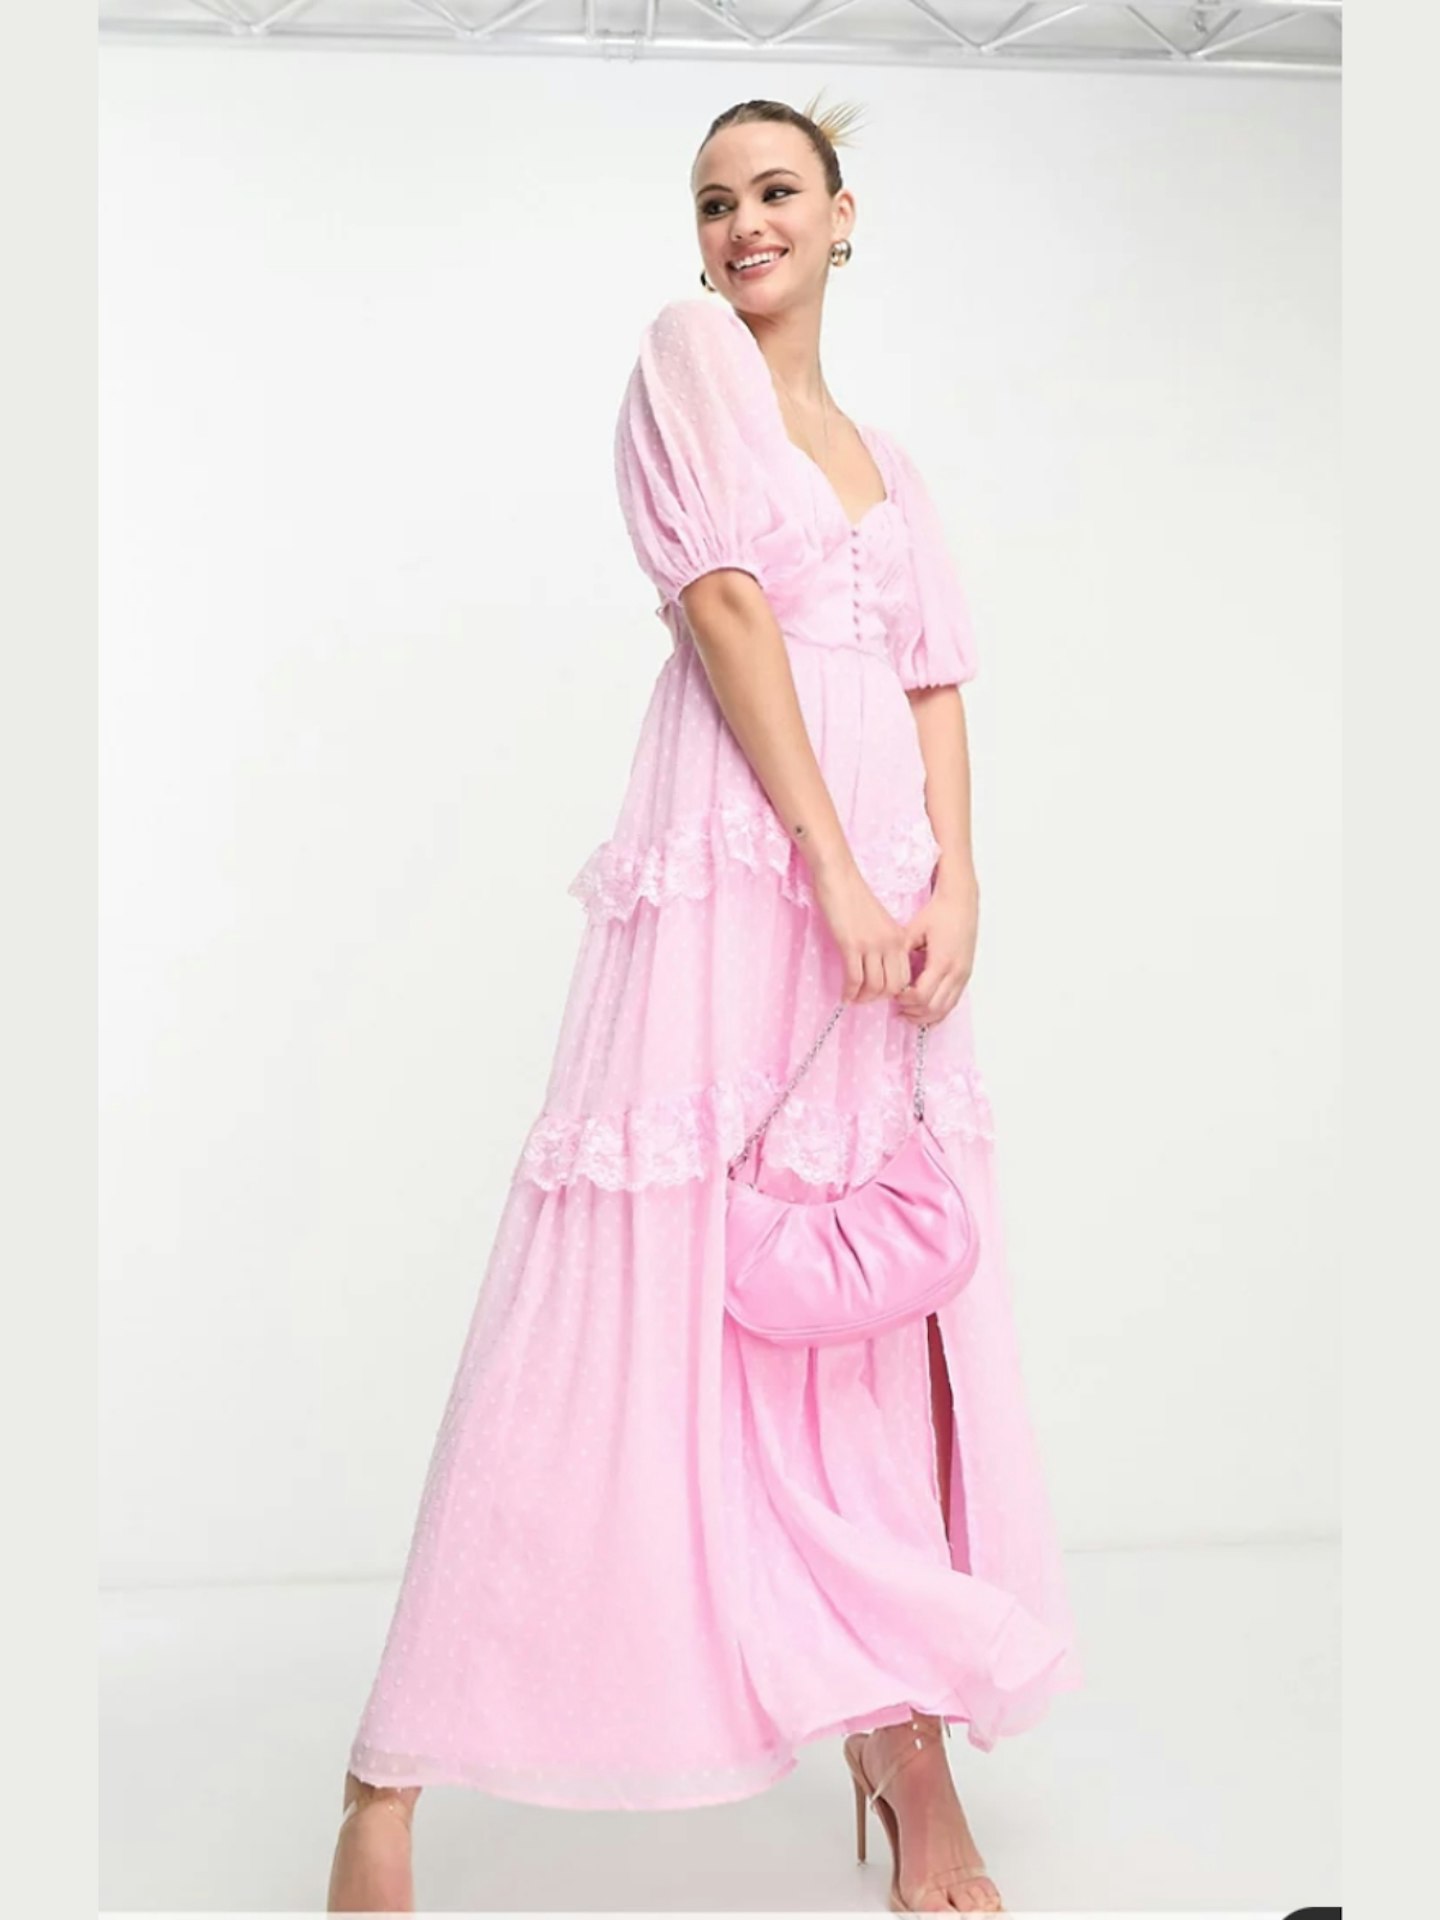 ASOS DESIGN Tall Open Back Lace Insert Dobby Maxi Tea Dress in Light Pink